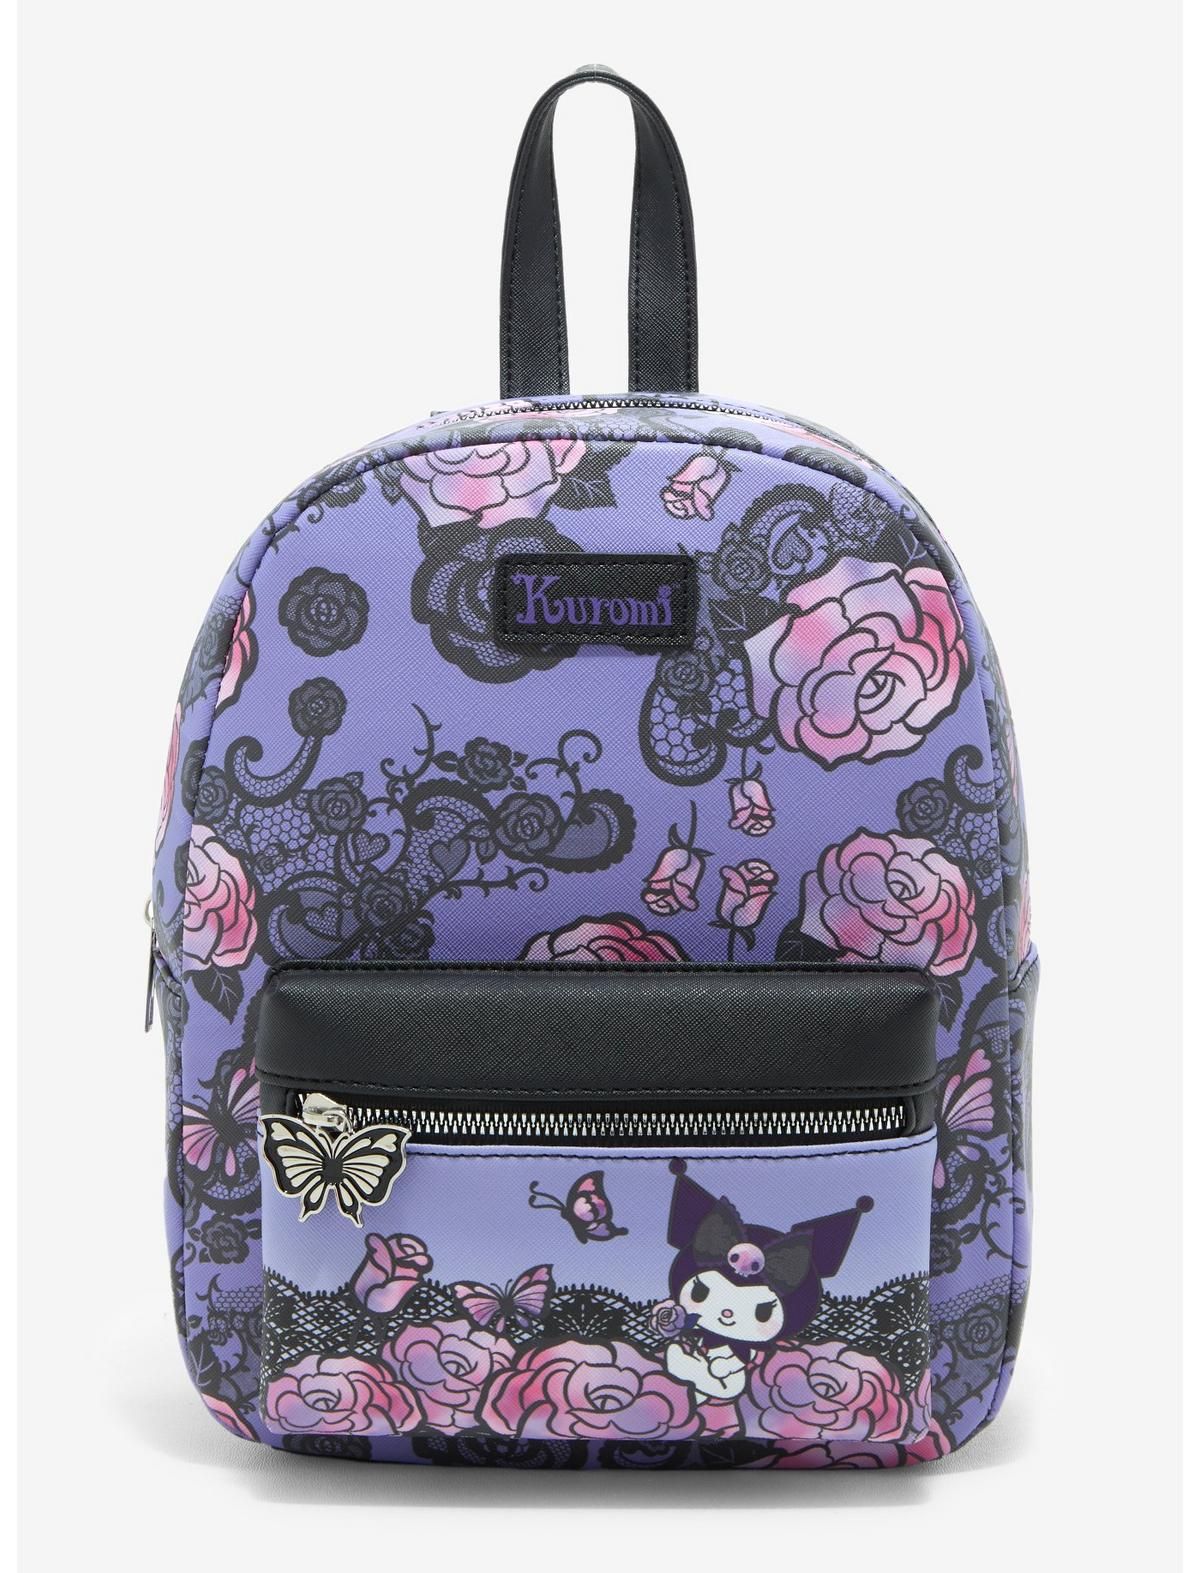 Kuromi Roses Lace Mini Backpack | Hot Topic | Hot Topic